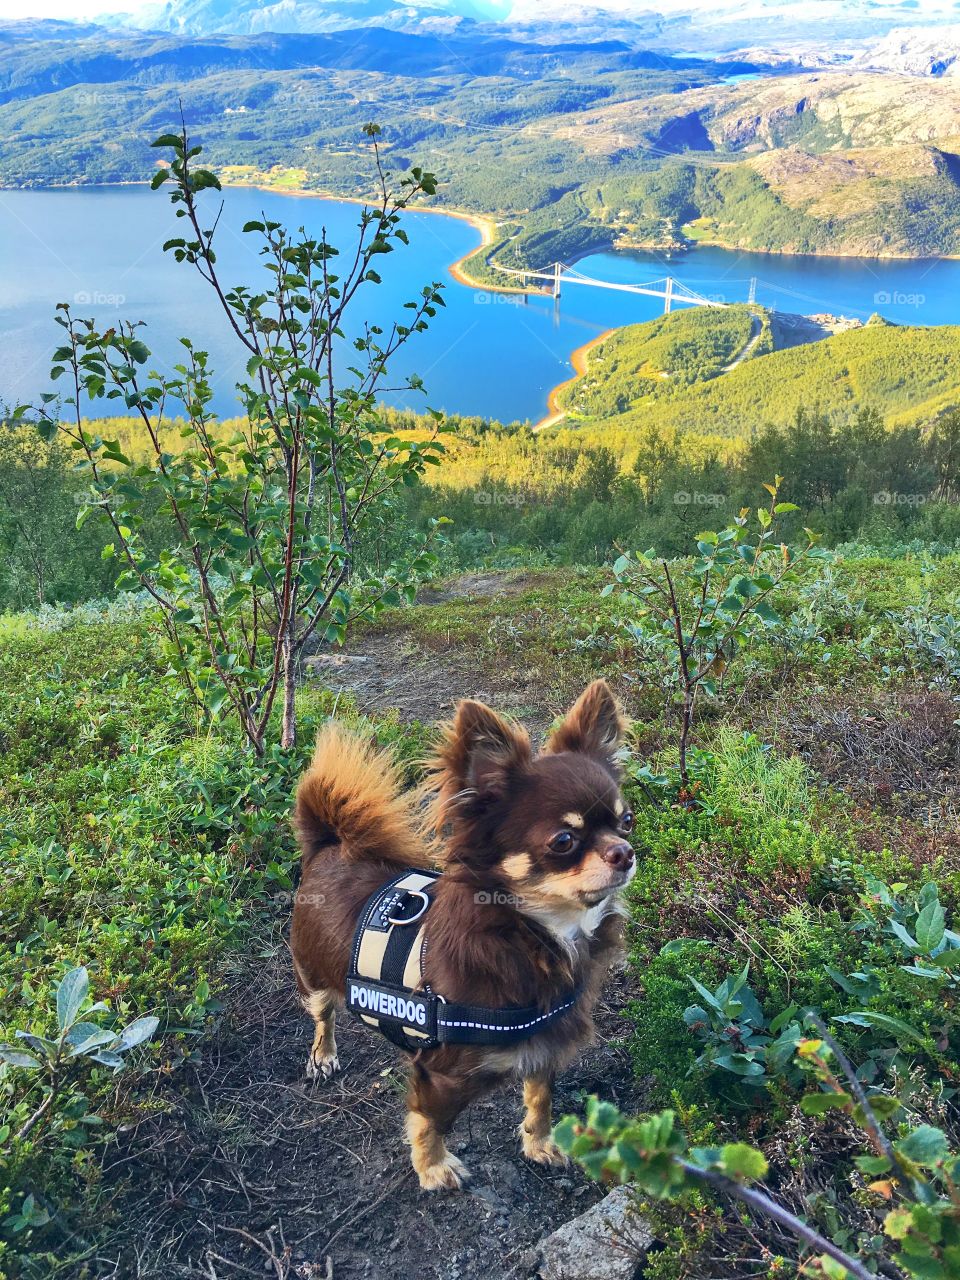 Kira the Chihuahua mountain hiking. Rough dog. ❤️